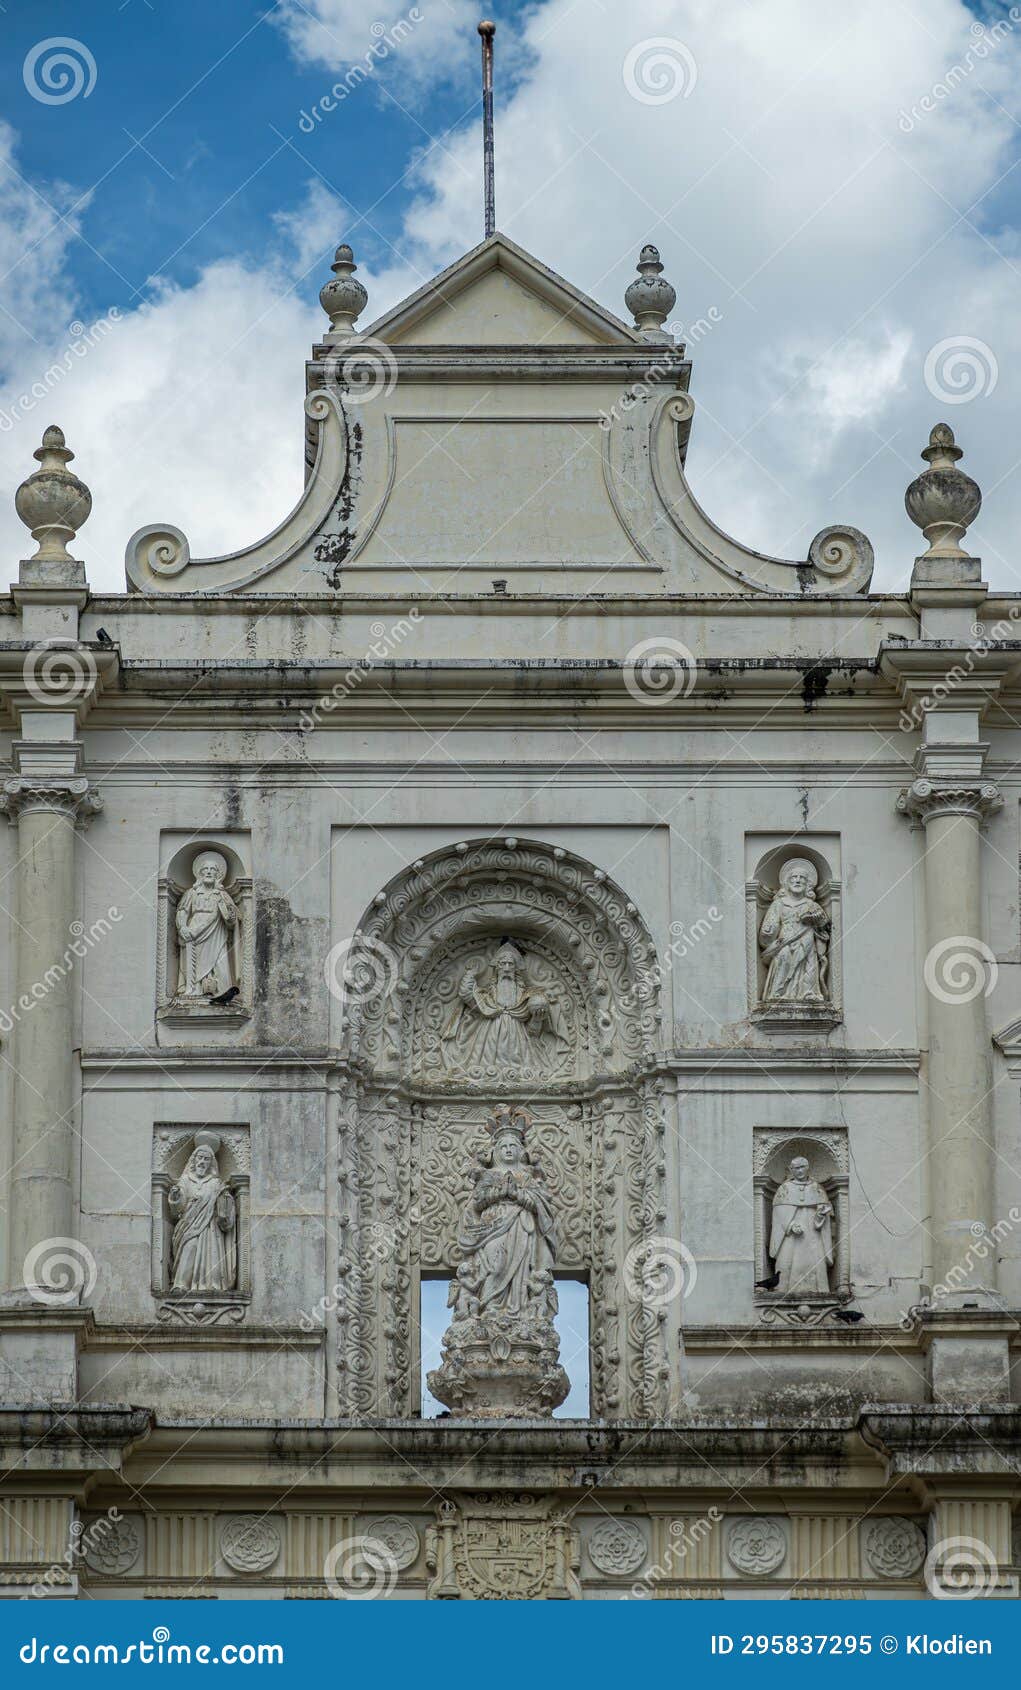 closeup, central top facade piece, la antigua, guatemala